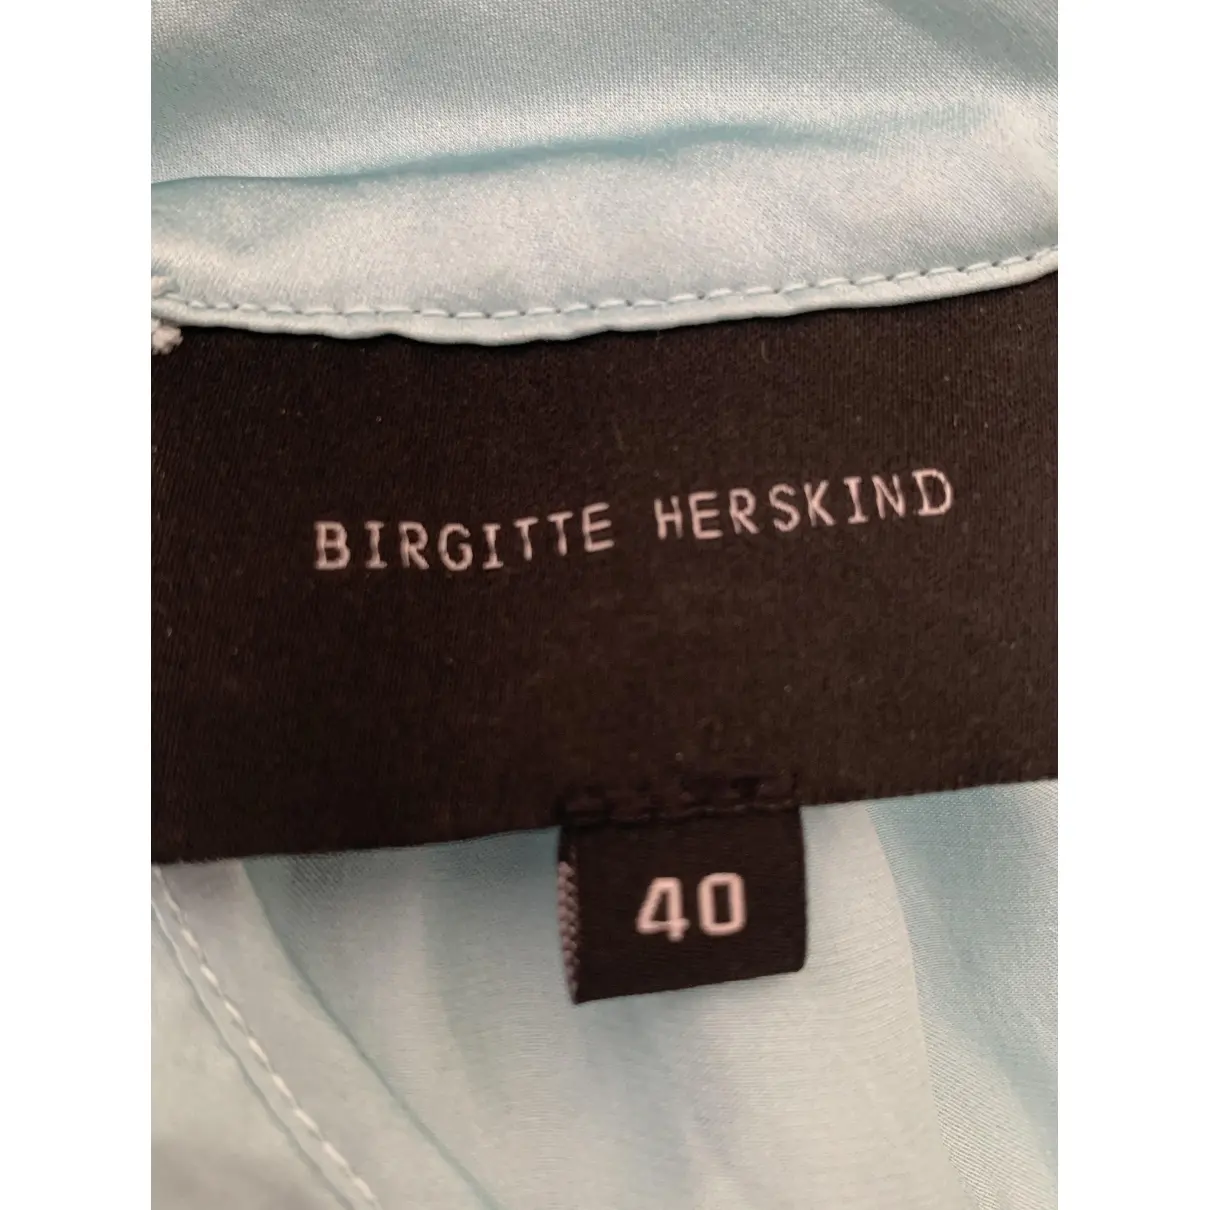 Buy Birgitte Herskind Silk blouse online